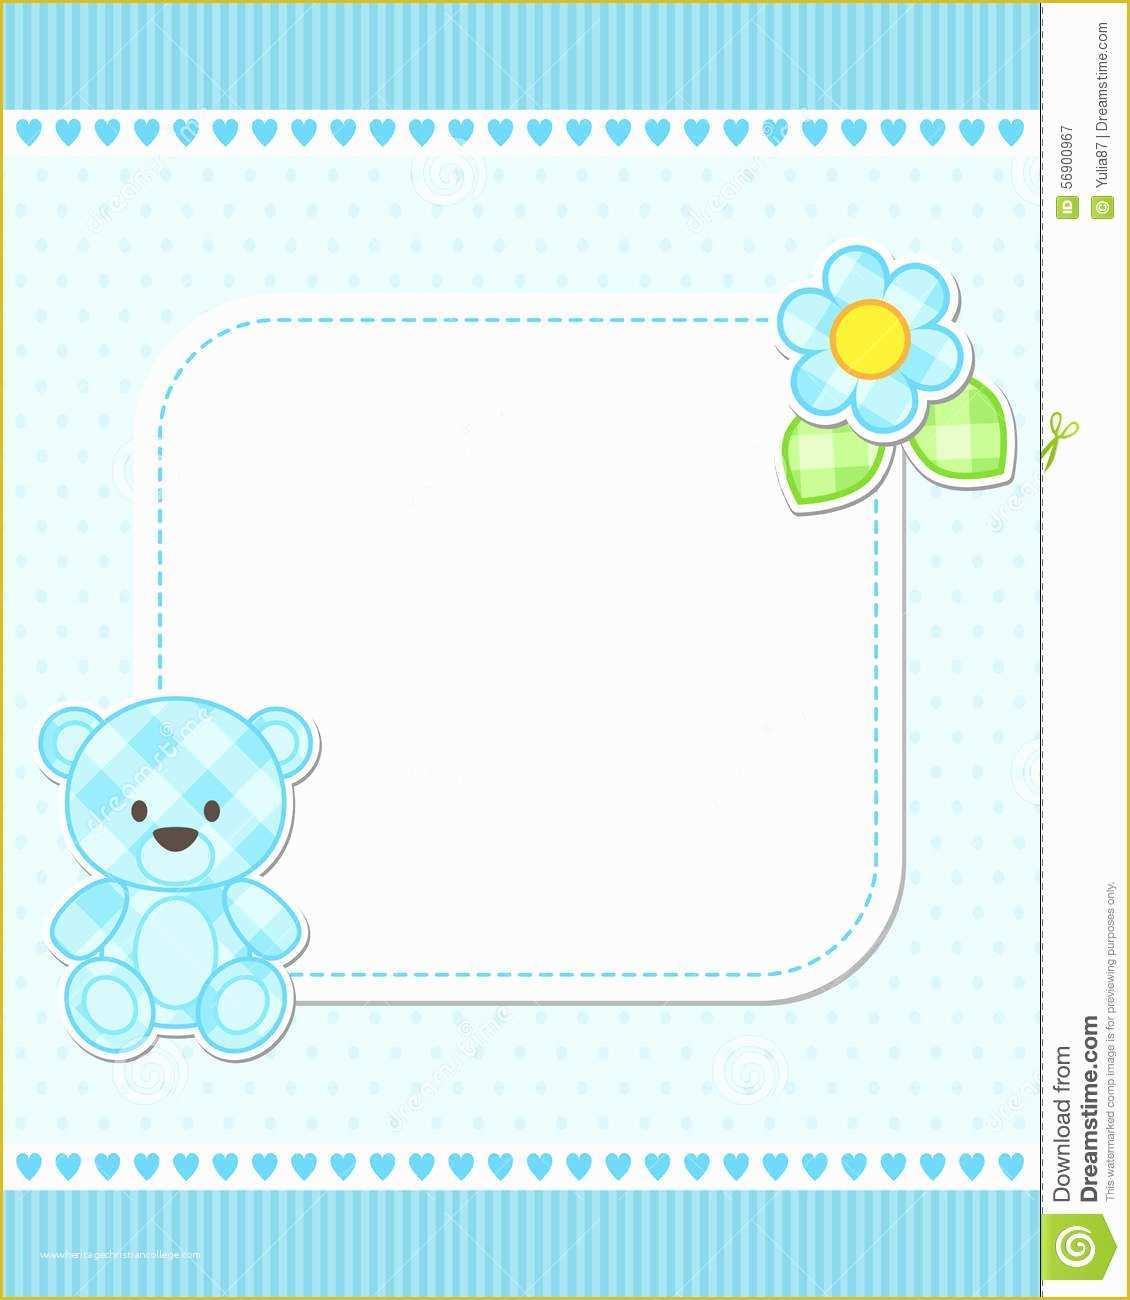 Teddy Bear Baby Shower Invitations Templates Free Of Blue Teddy Bear Card Stock Vector Illustration Of